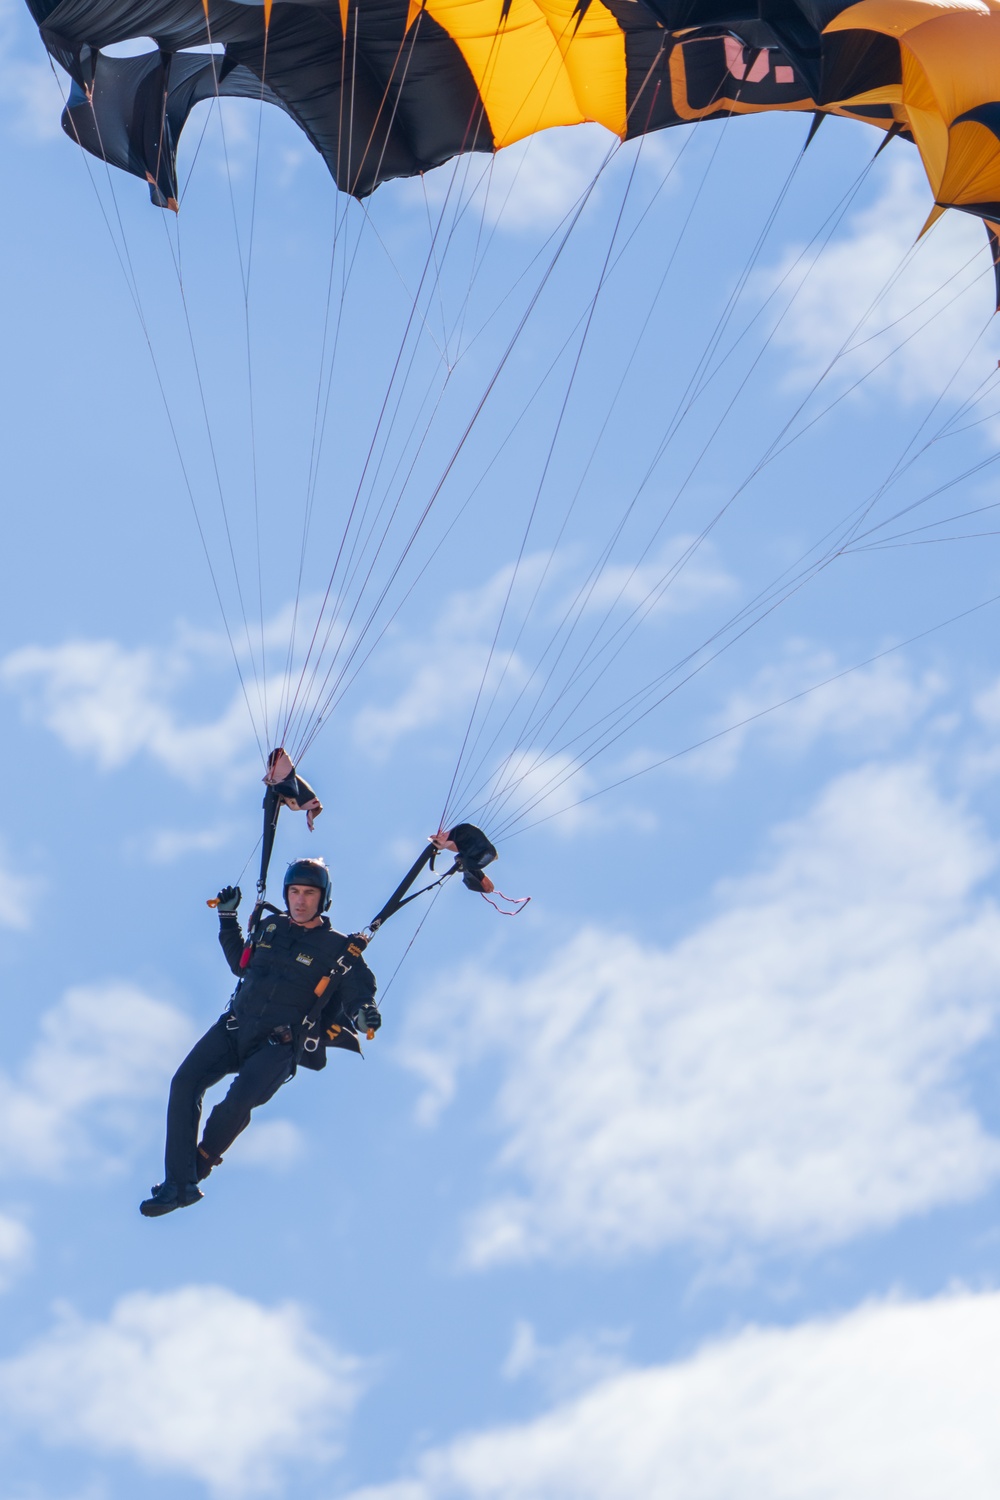 The U.S. Army Parachute Team skydives into Miramar Airshow